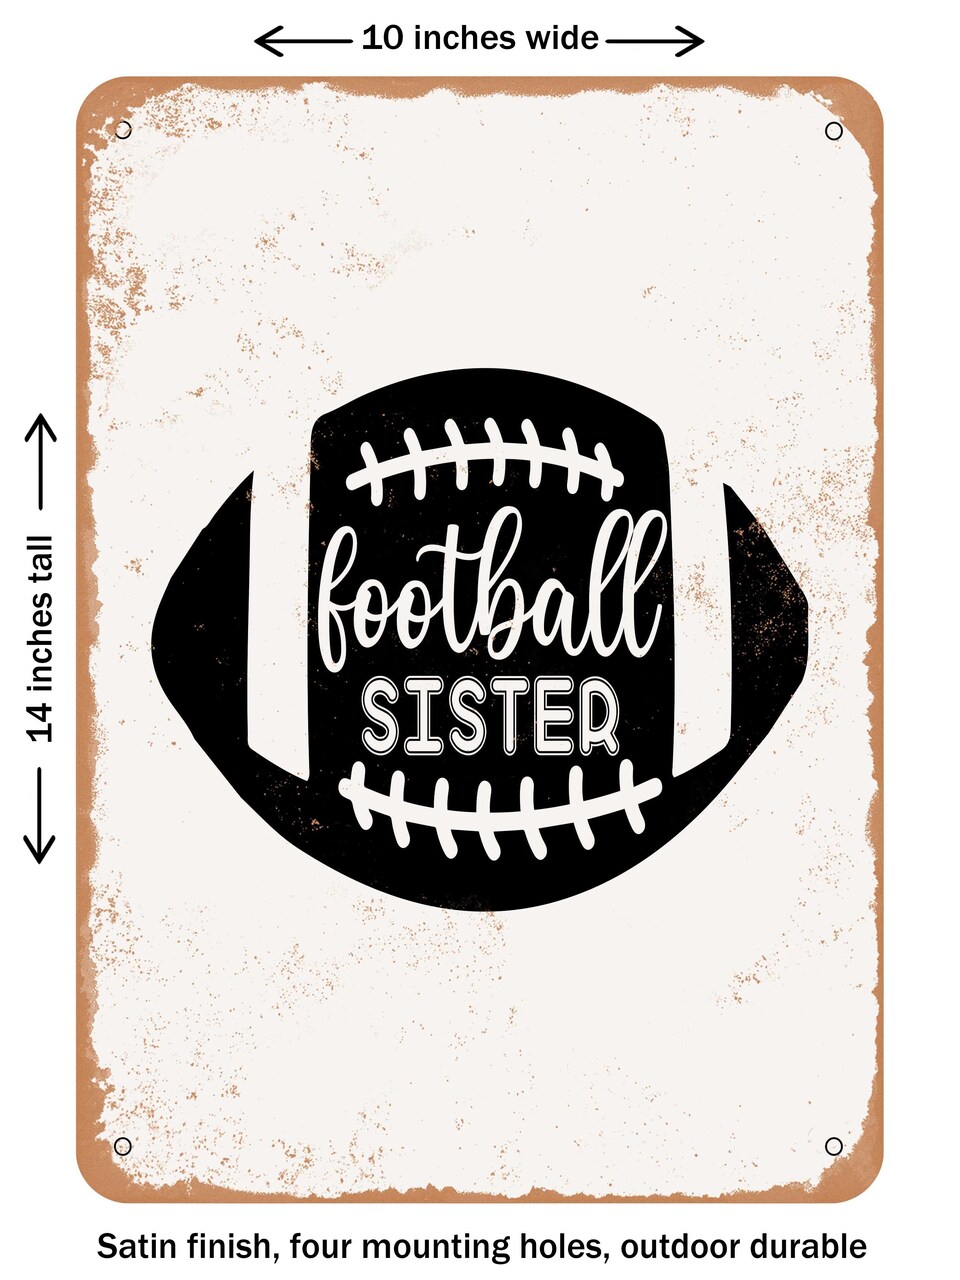 DECORATIVE METAL SIGN - Football Sister - 4  - Vintage Rusty Look